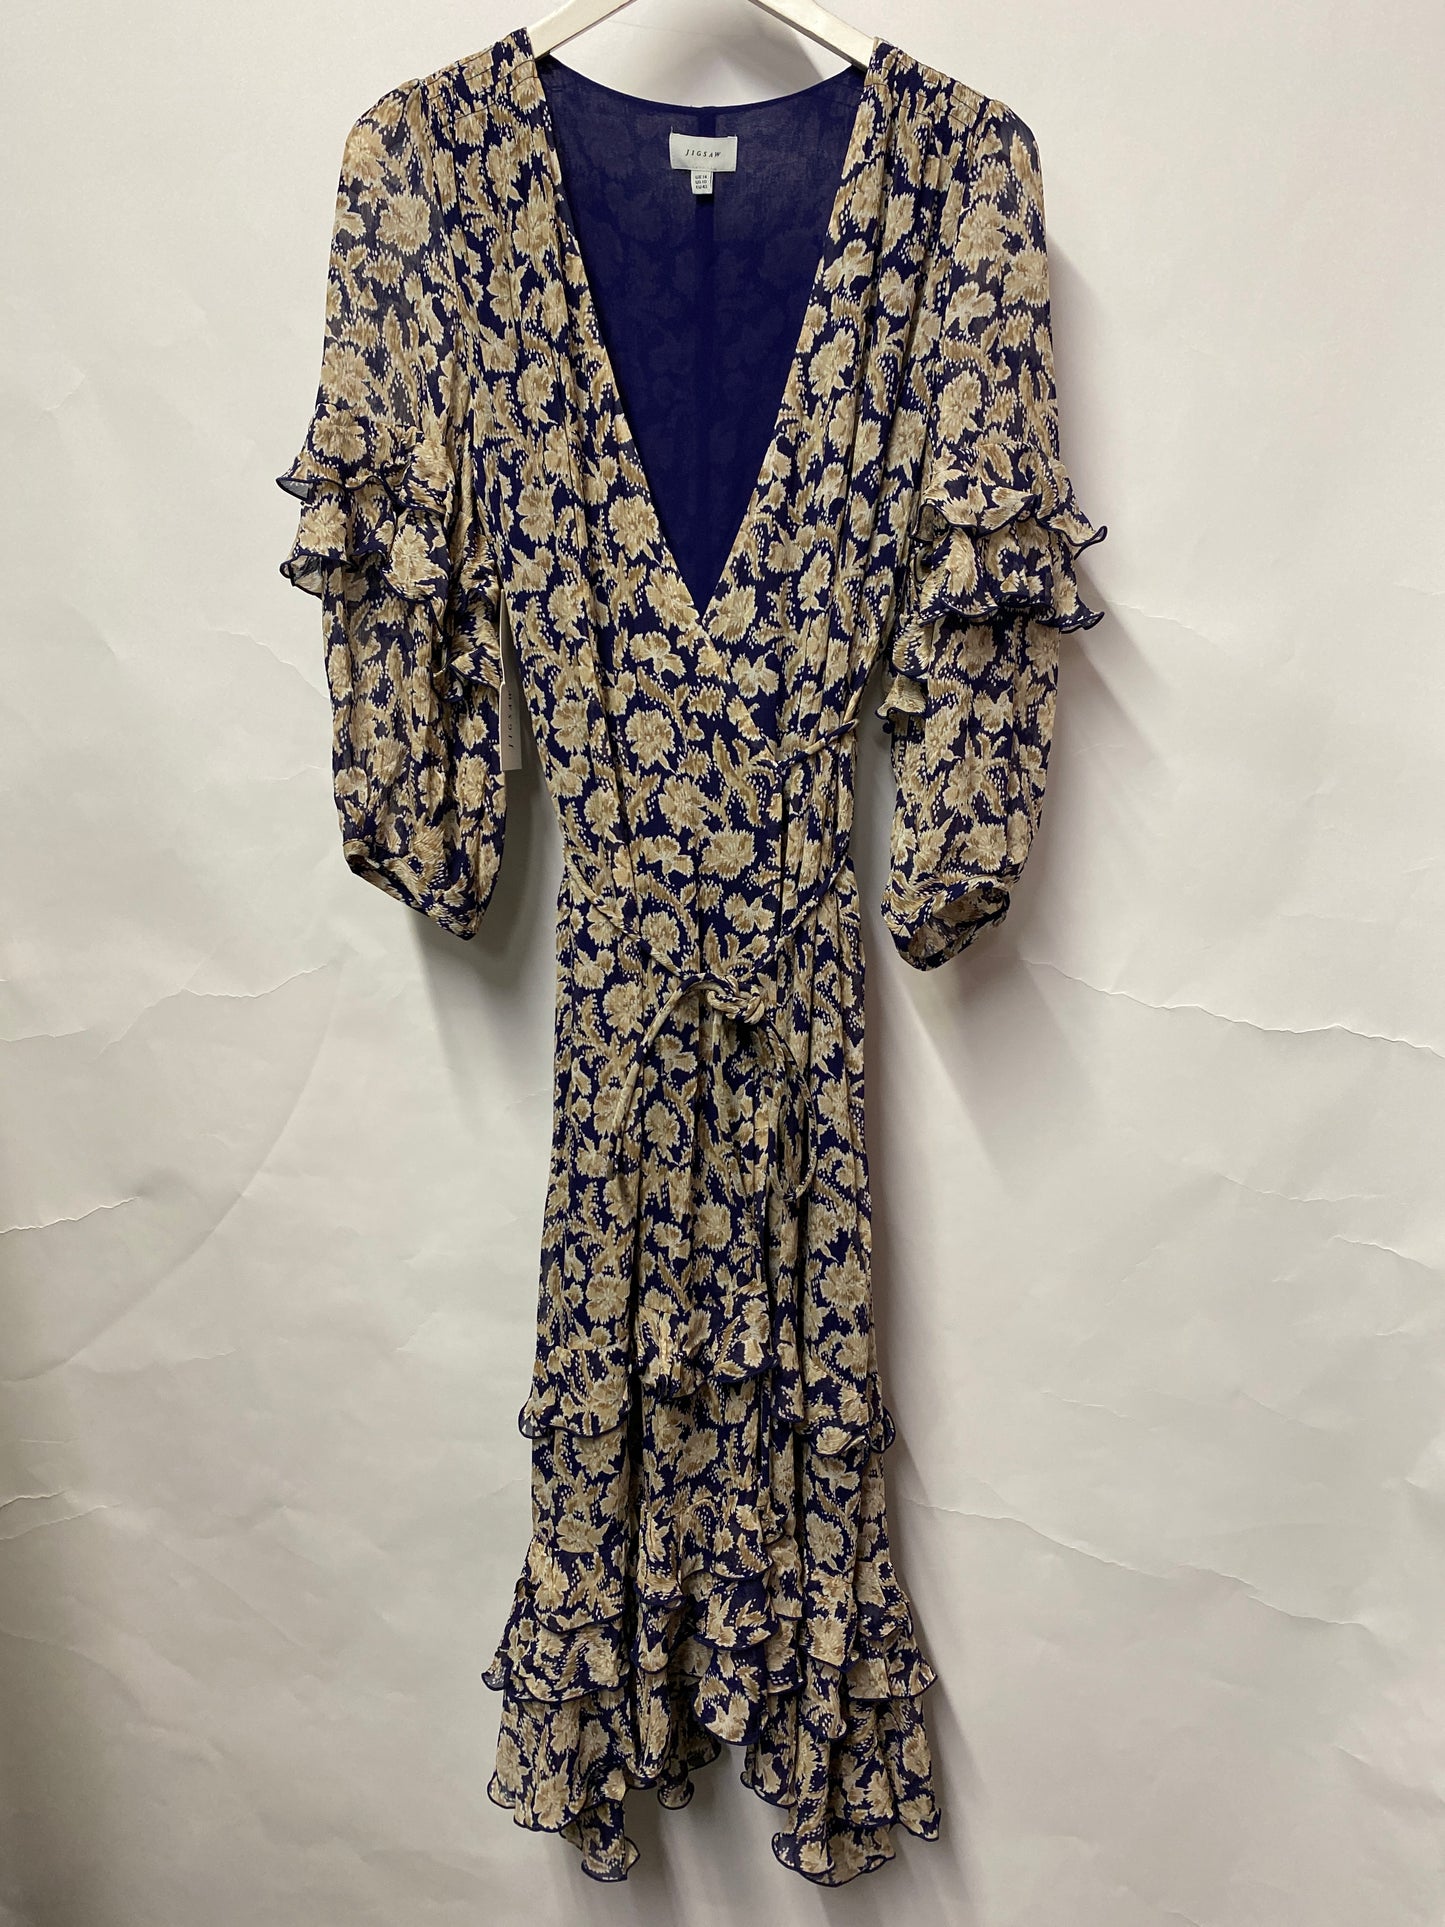 Jigsaw Blue and Cream Ruffle Wrap Mid Length Dress 14 BNWT